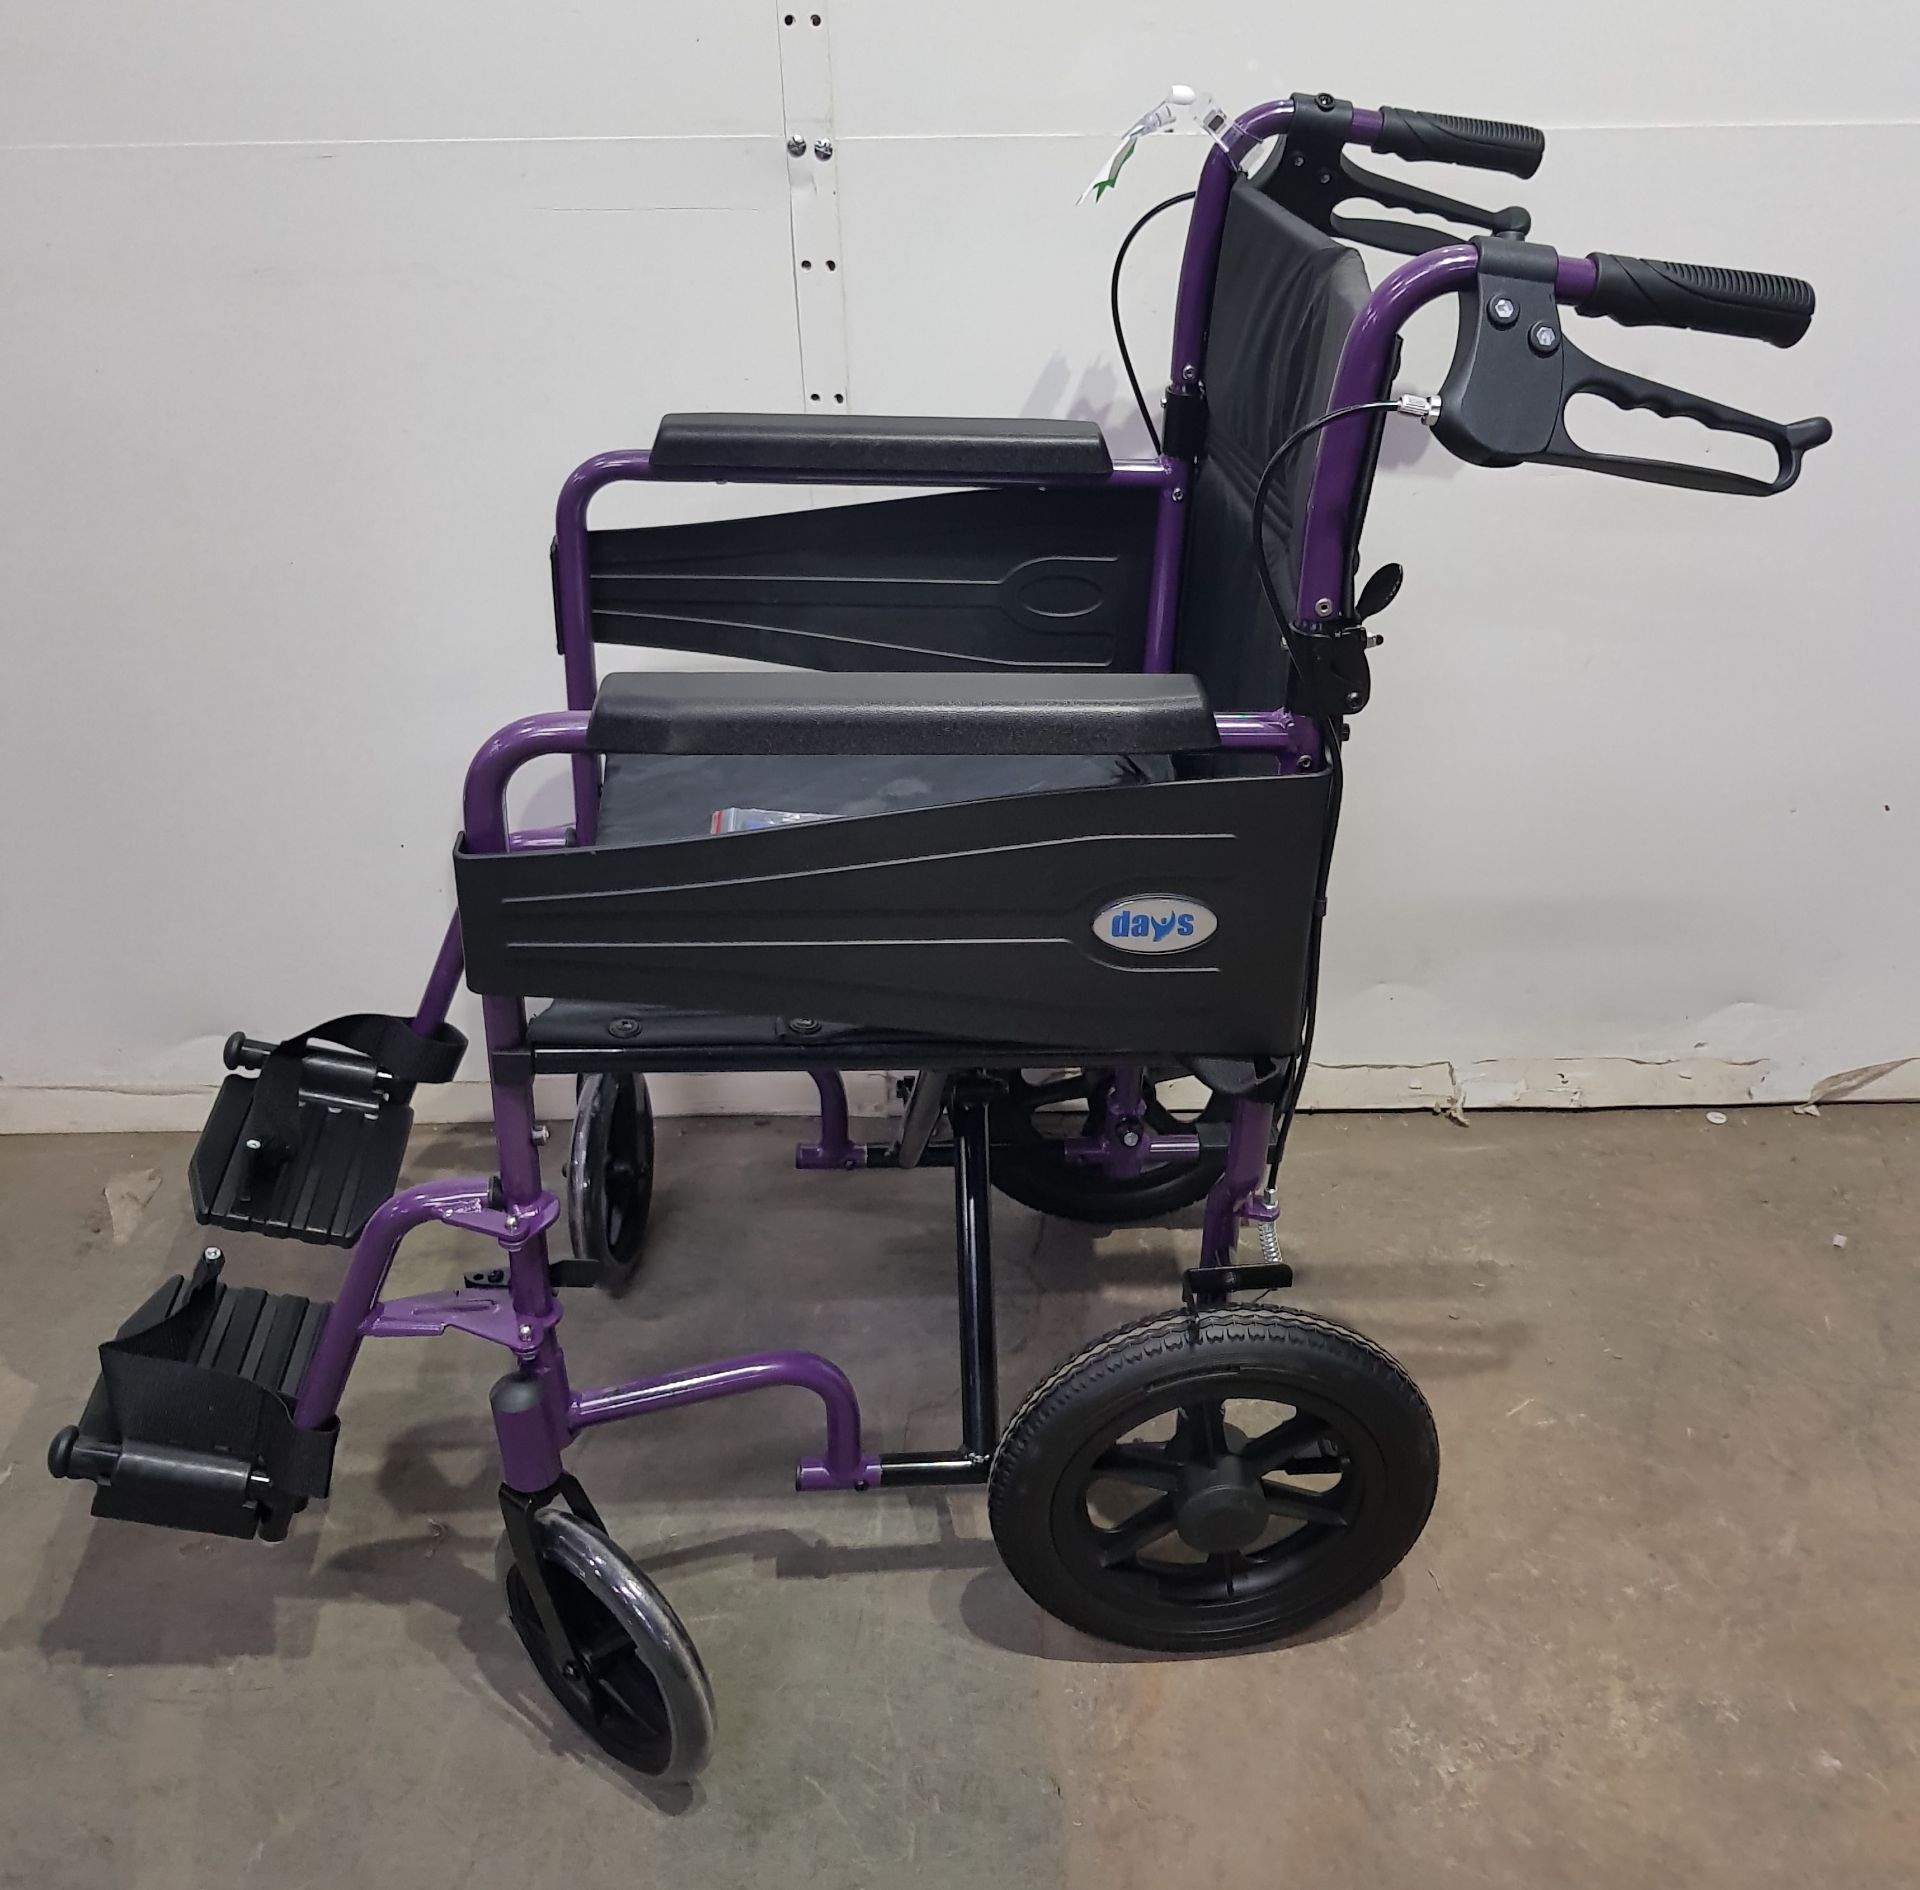 Days Escape Lite Wheelchair - Image 3 of 5